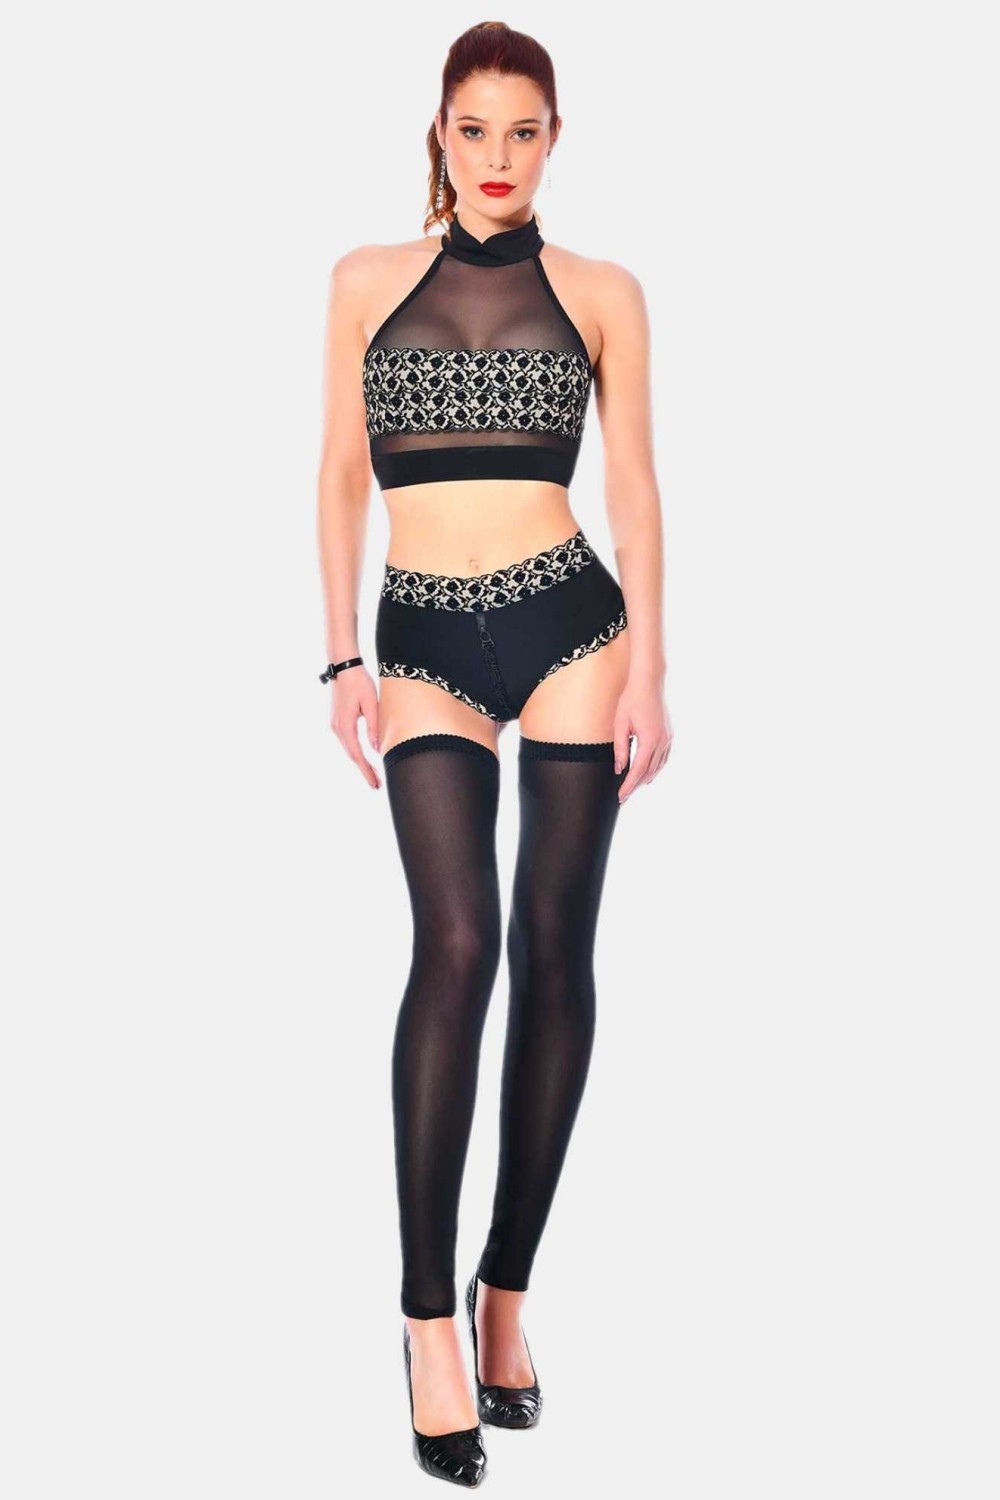 Liberty, sexy shorts & stockings - Patrice Catanzaro Official Website